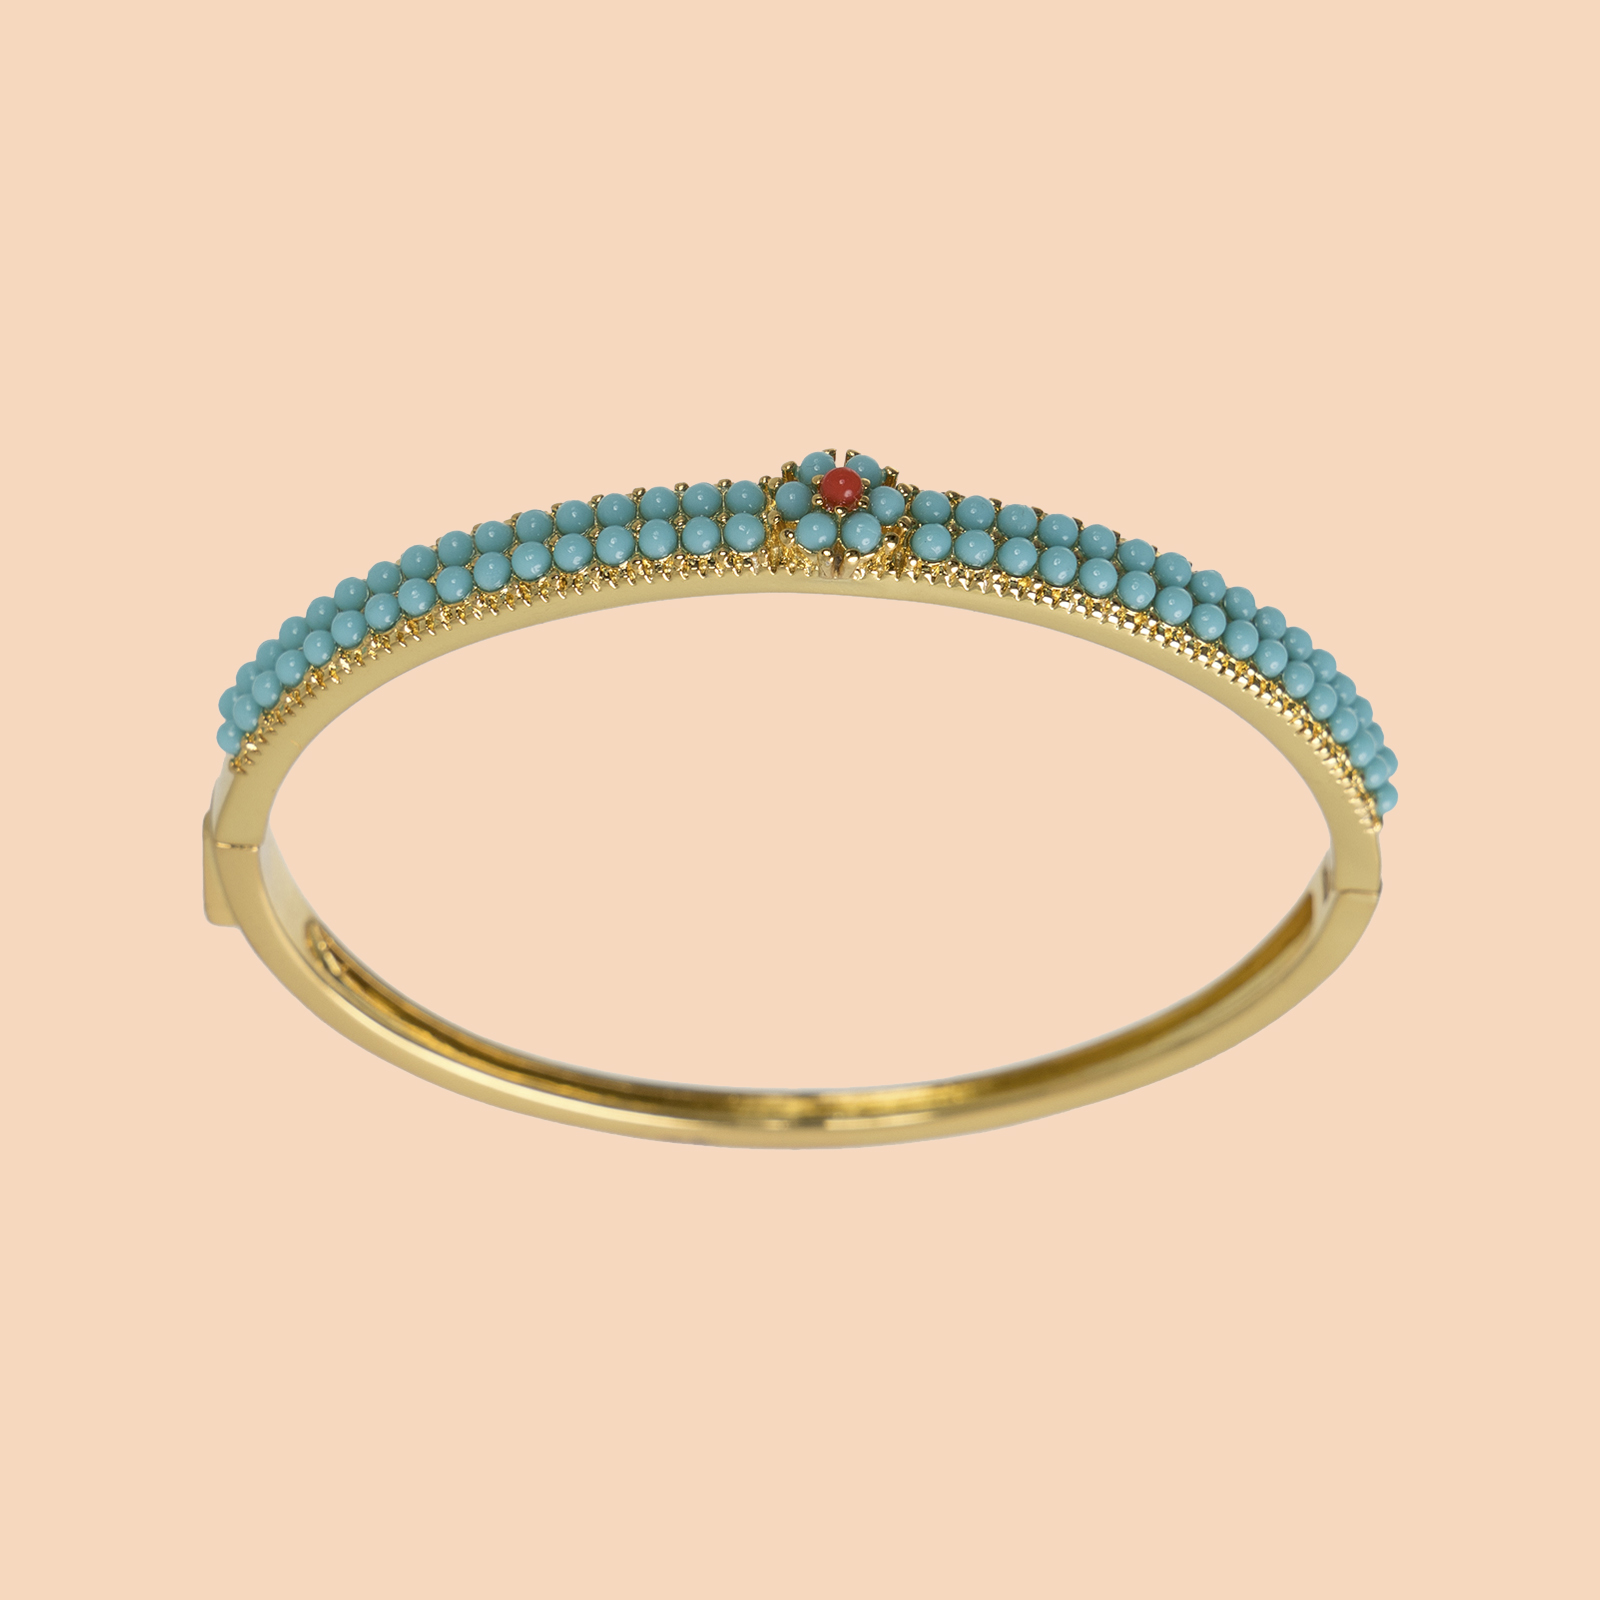 The Amazon Bracelet Turquoise